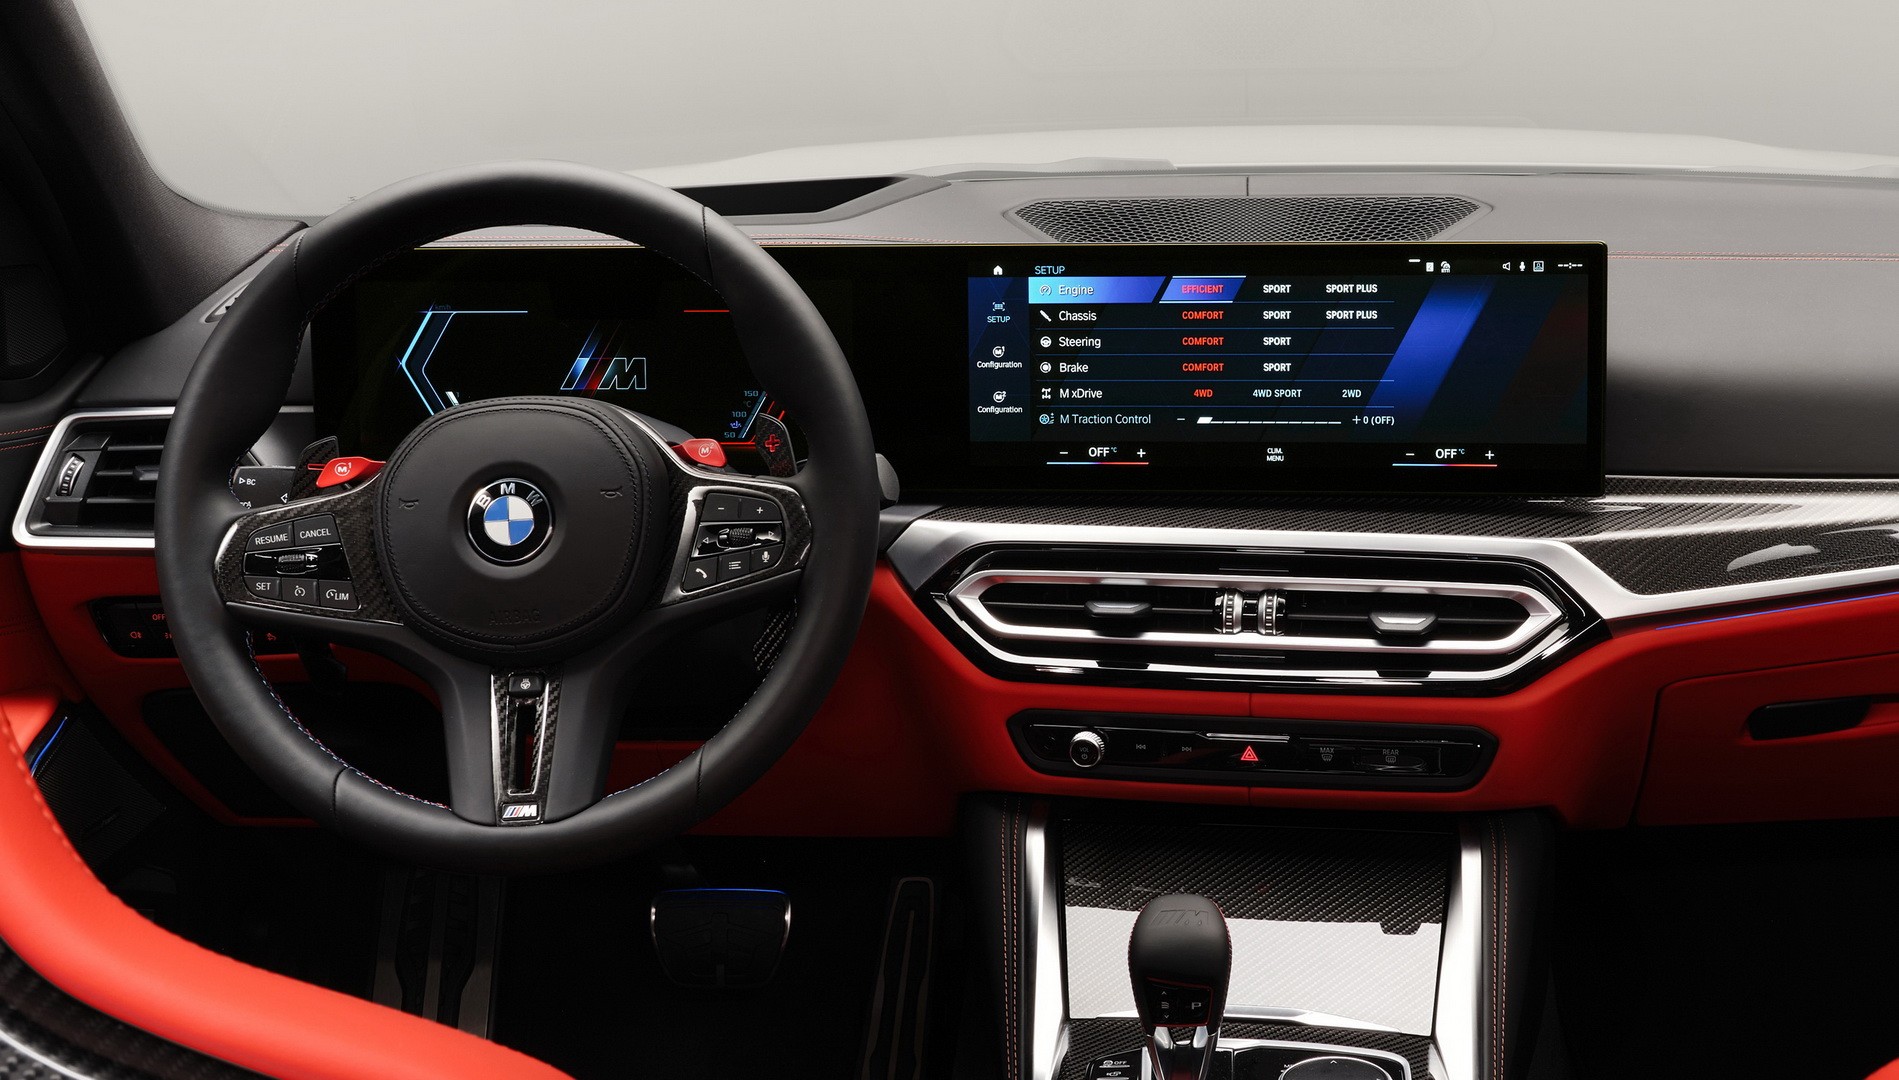 2023 BMW M3 LCI Interior Revealed, Boasts Curved Display and LatestGen